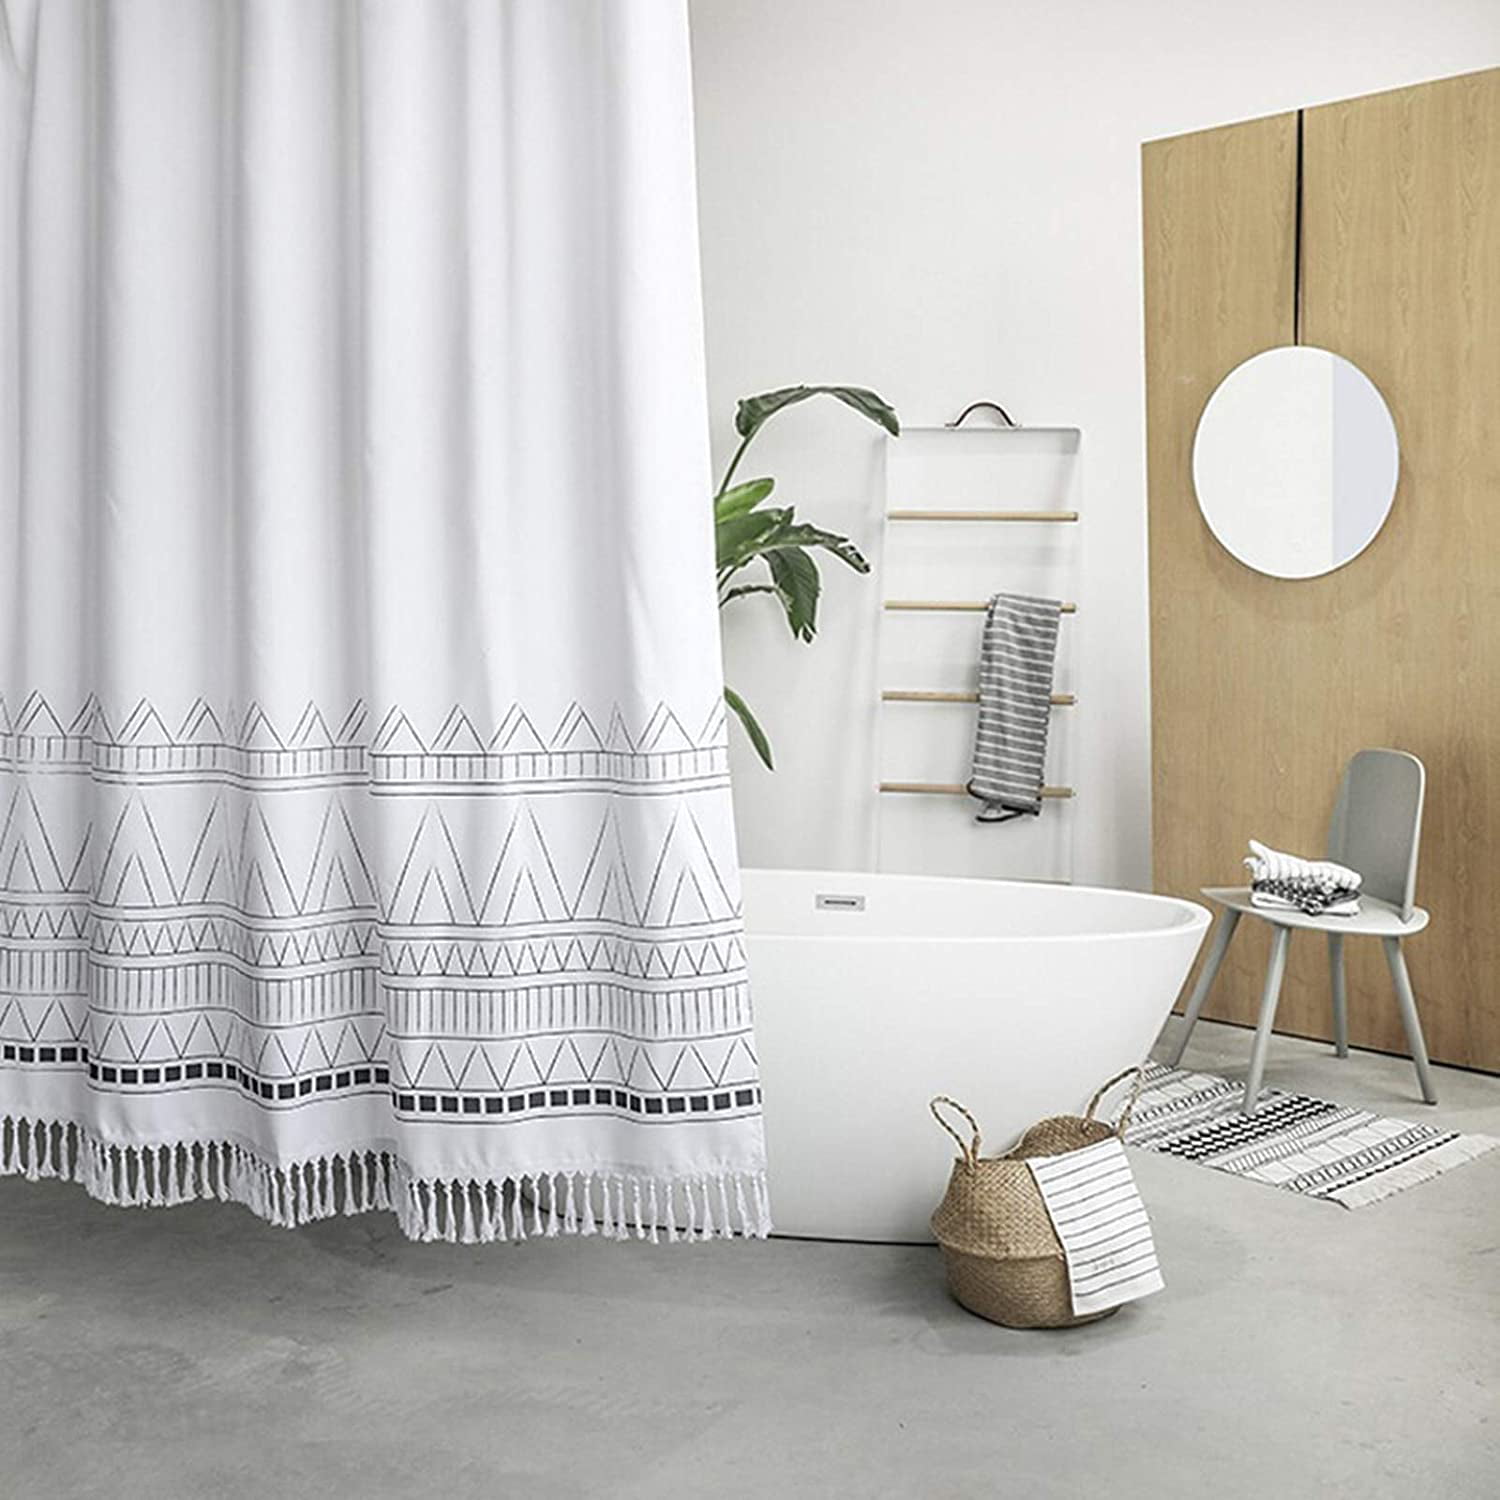 12 Hooks Shower Curtain Decor Set Wooden Board Decorative Pattern Bath Curtains 